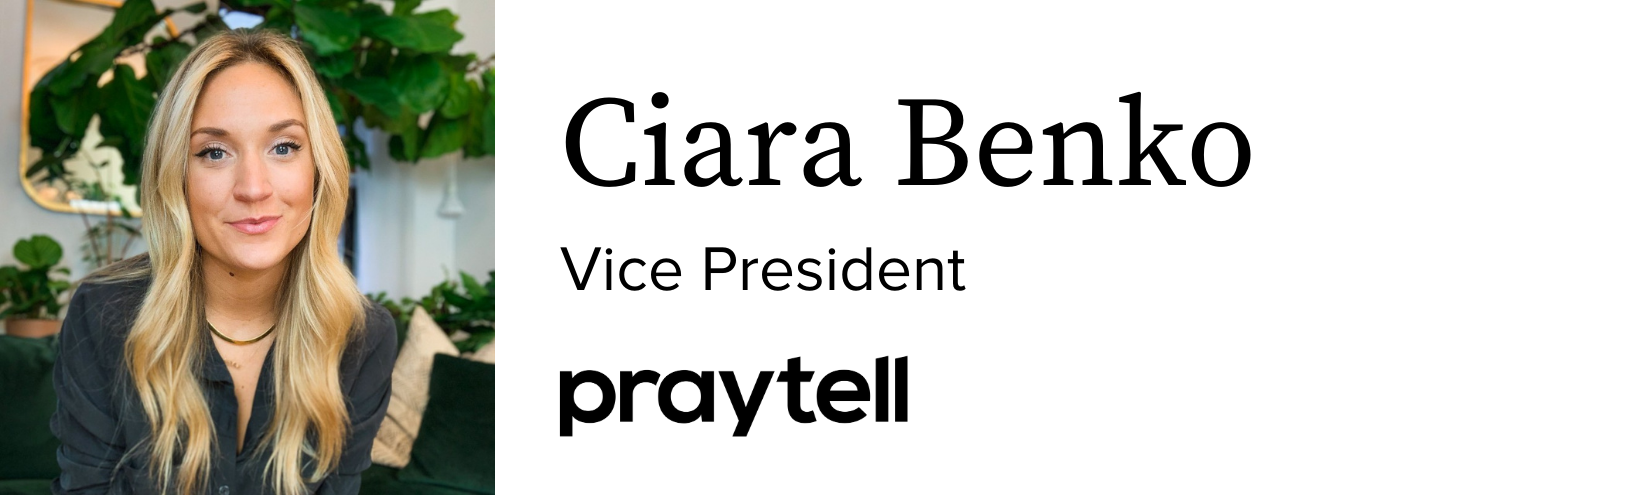 ciara-benko-webinar-speaker